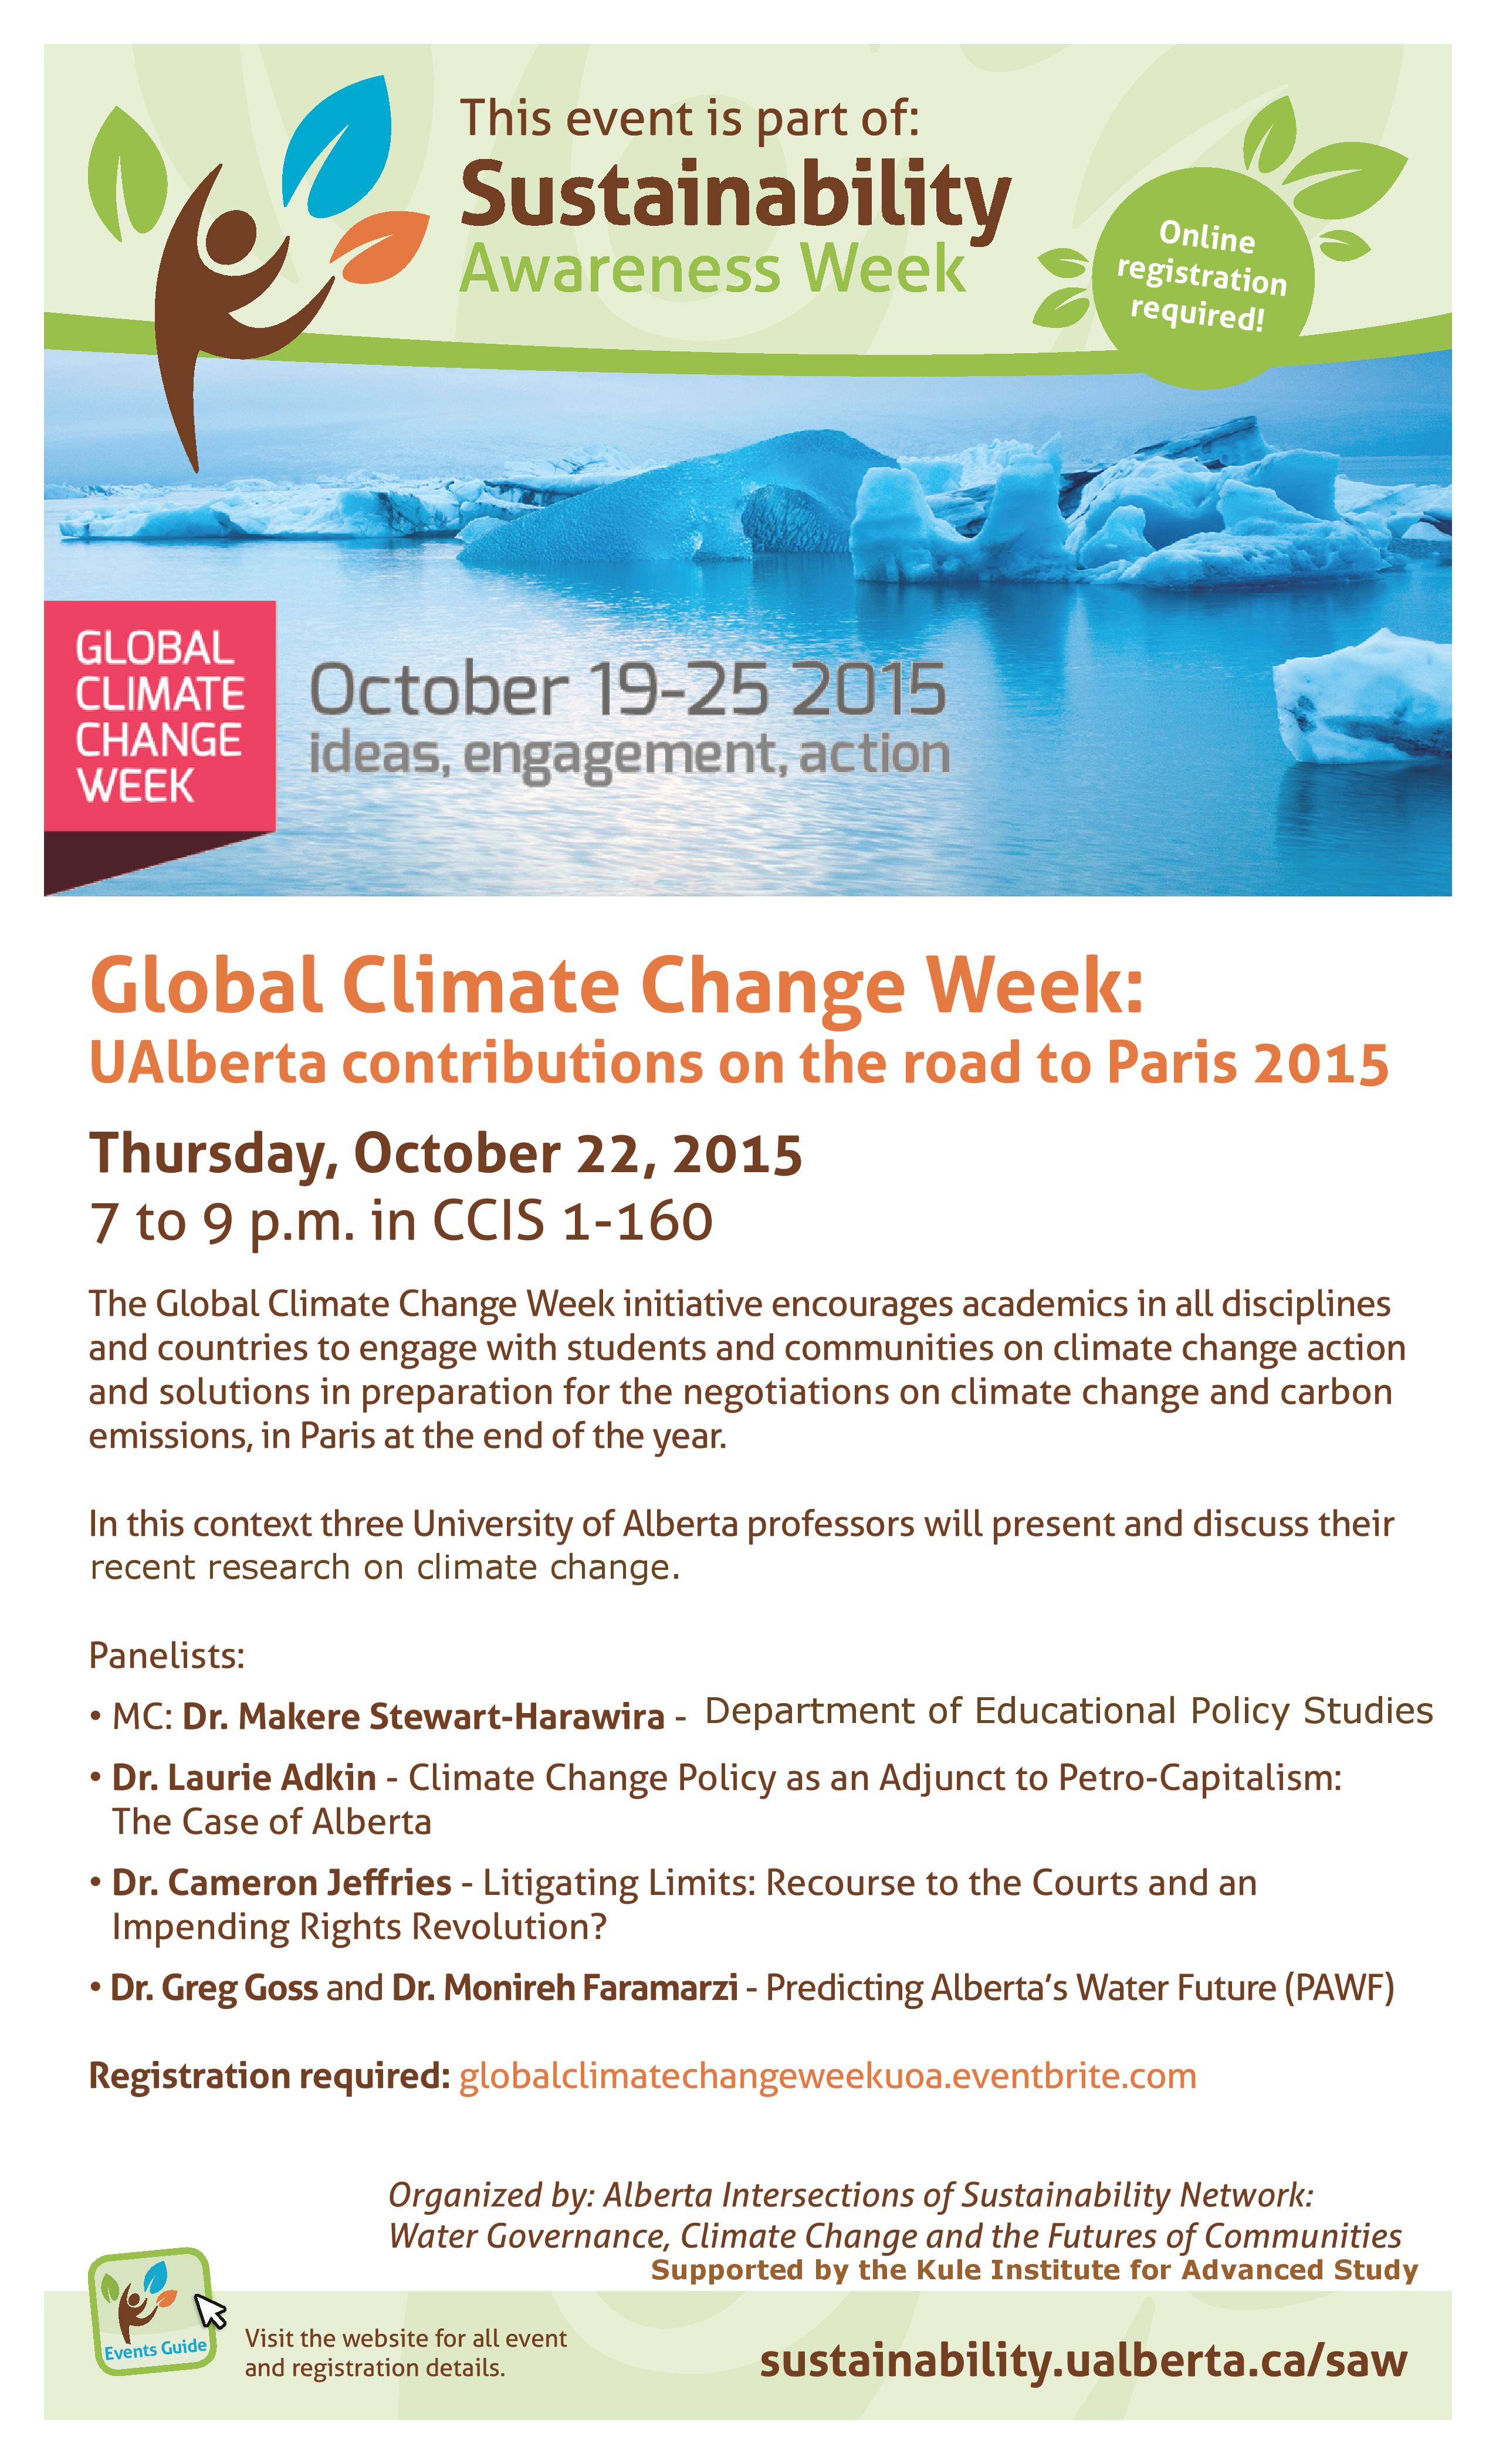 Global Climate Change Week Kule presentation poster